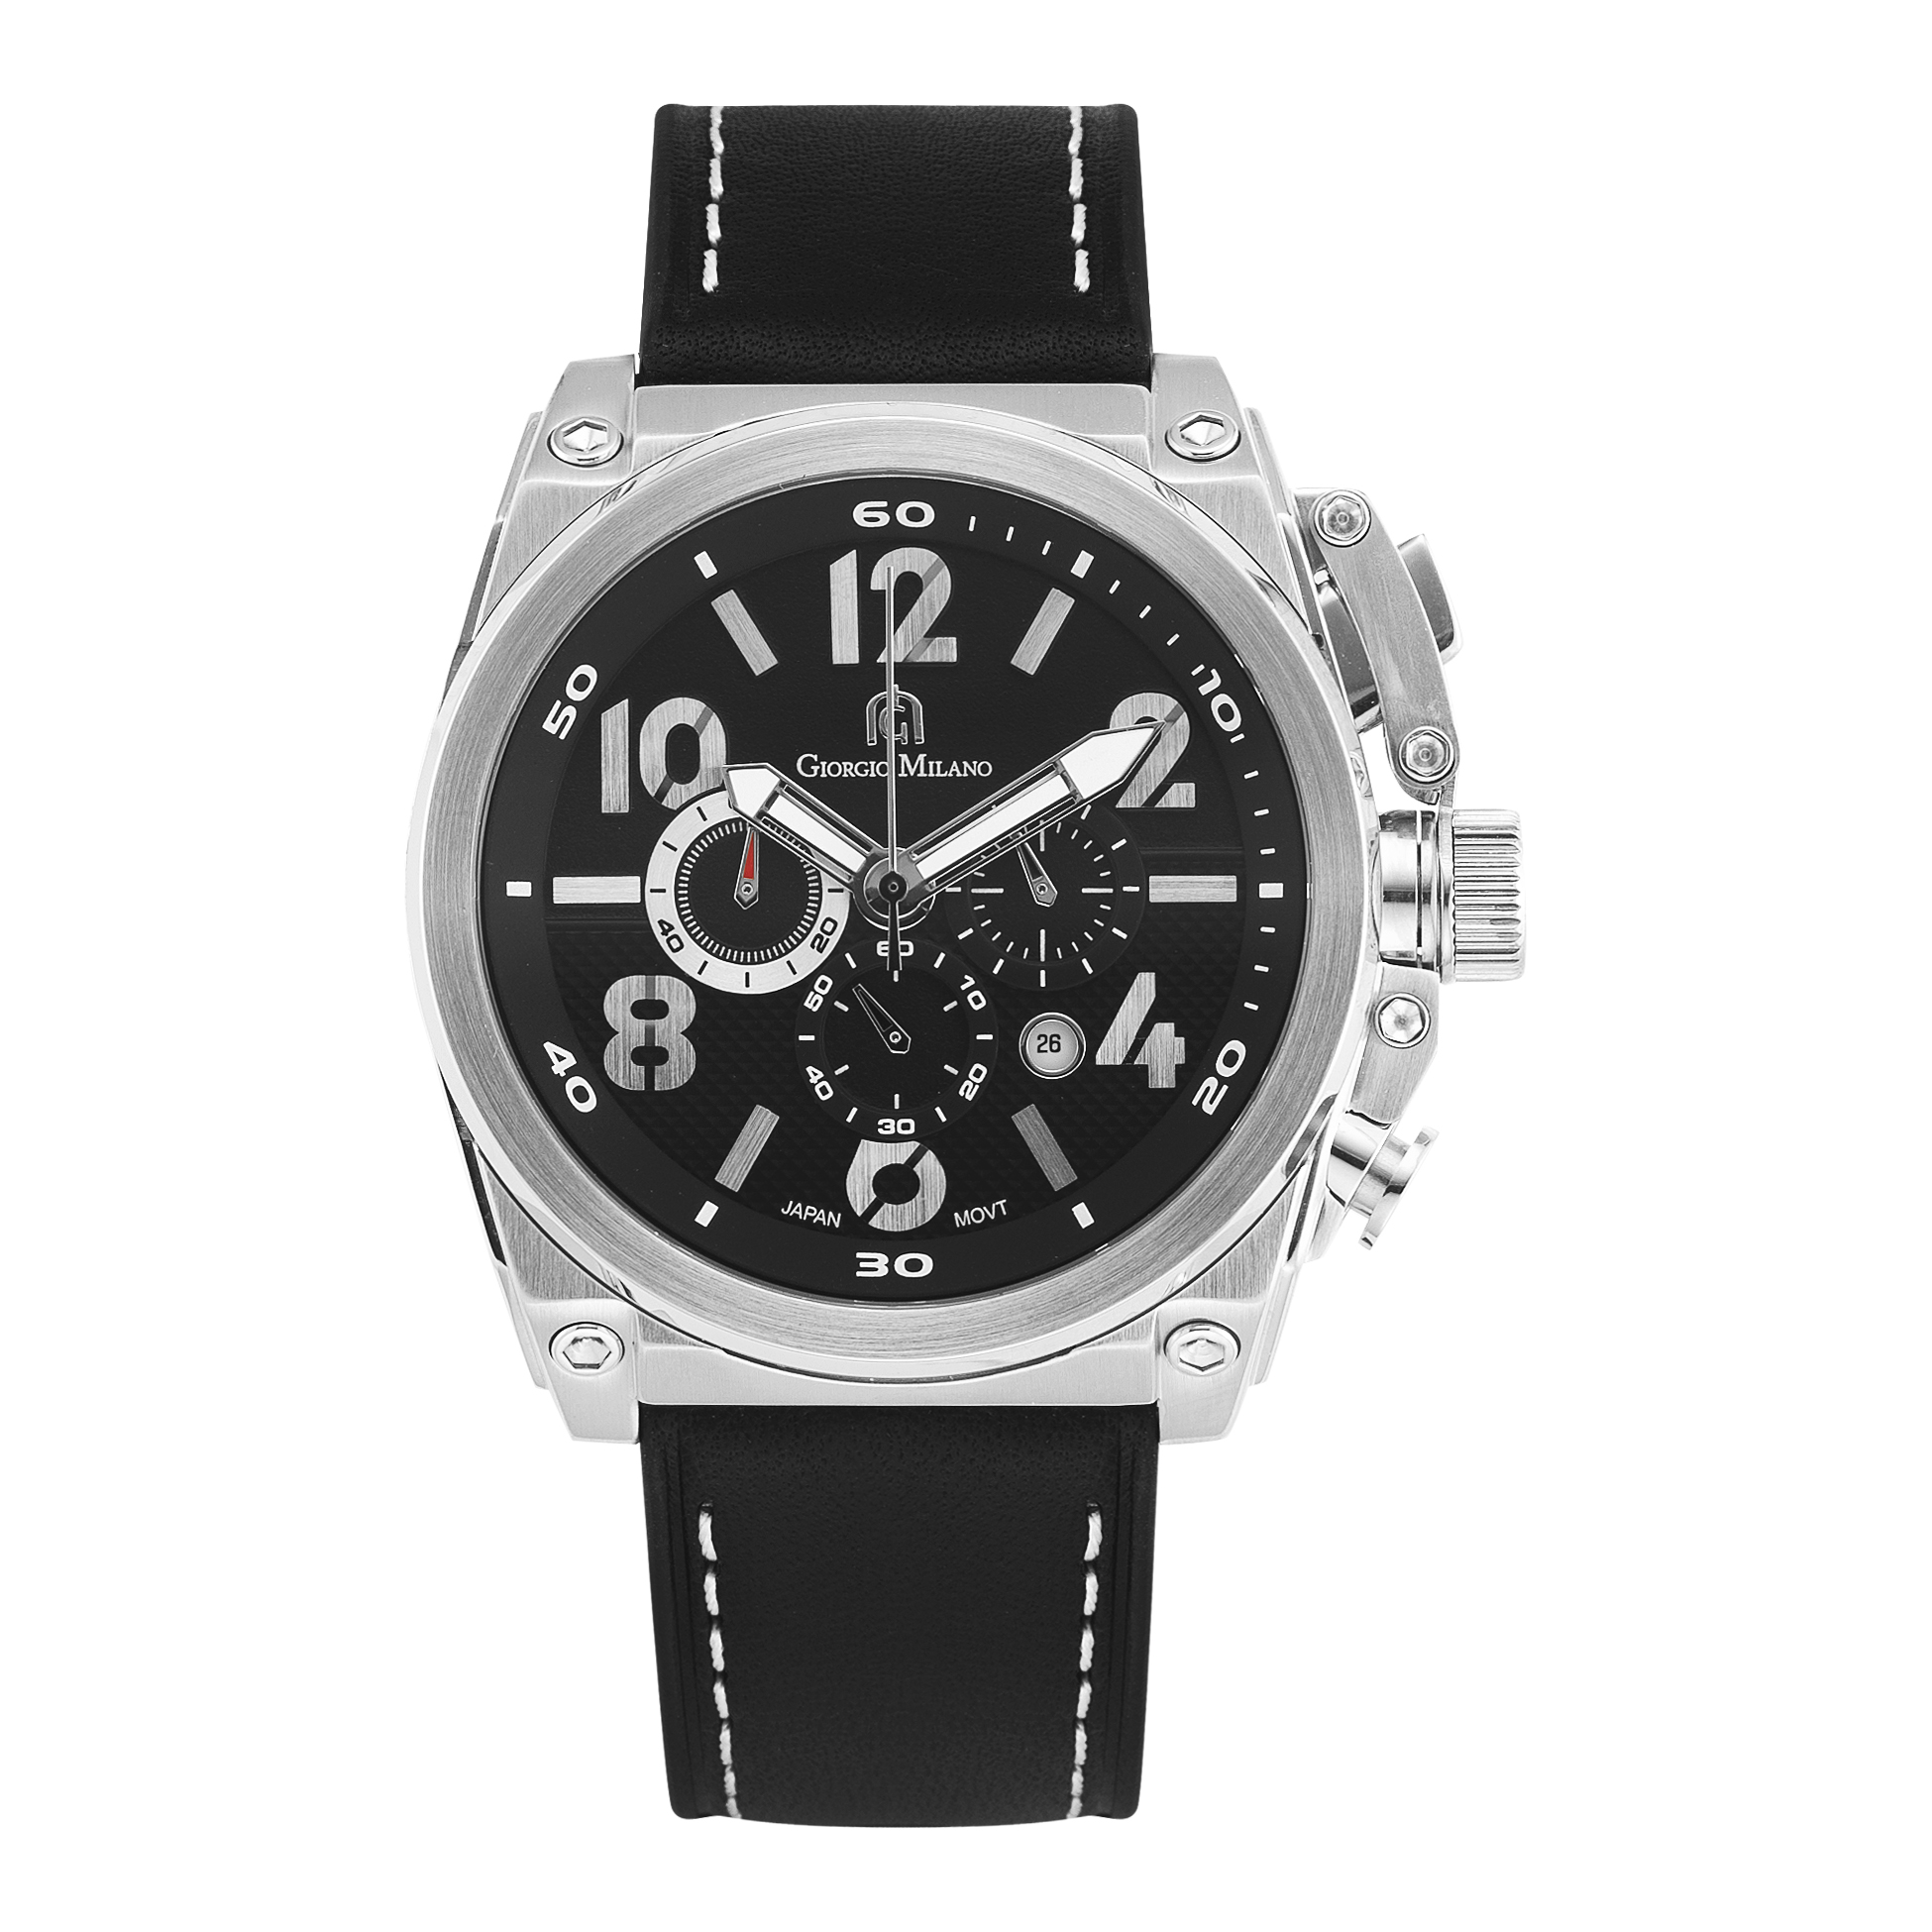 MARINO-Men's Giorgio Milano Stainless Steel IP Black Watch with Genuine Leather Straps